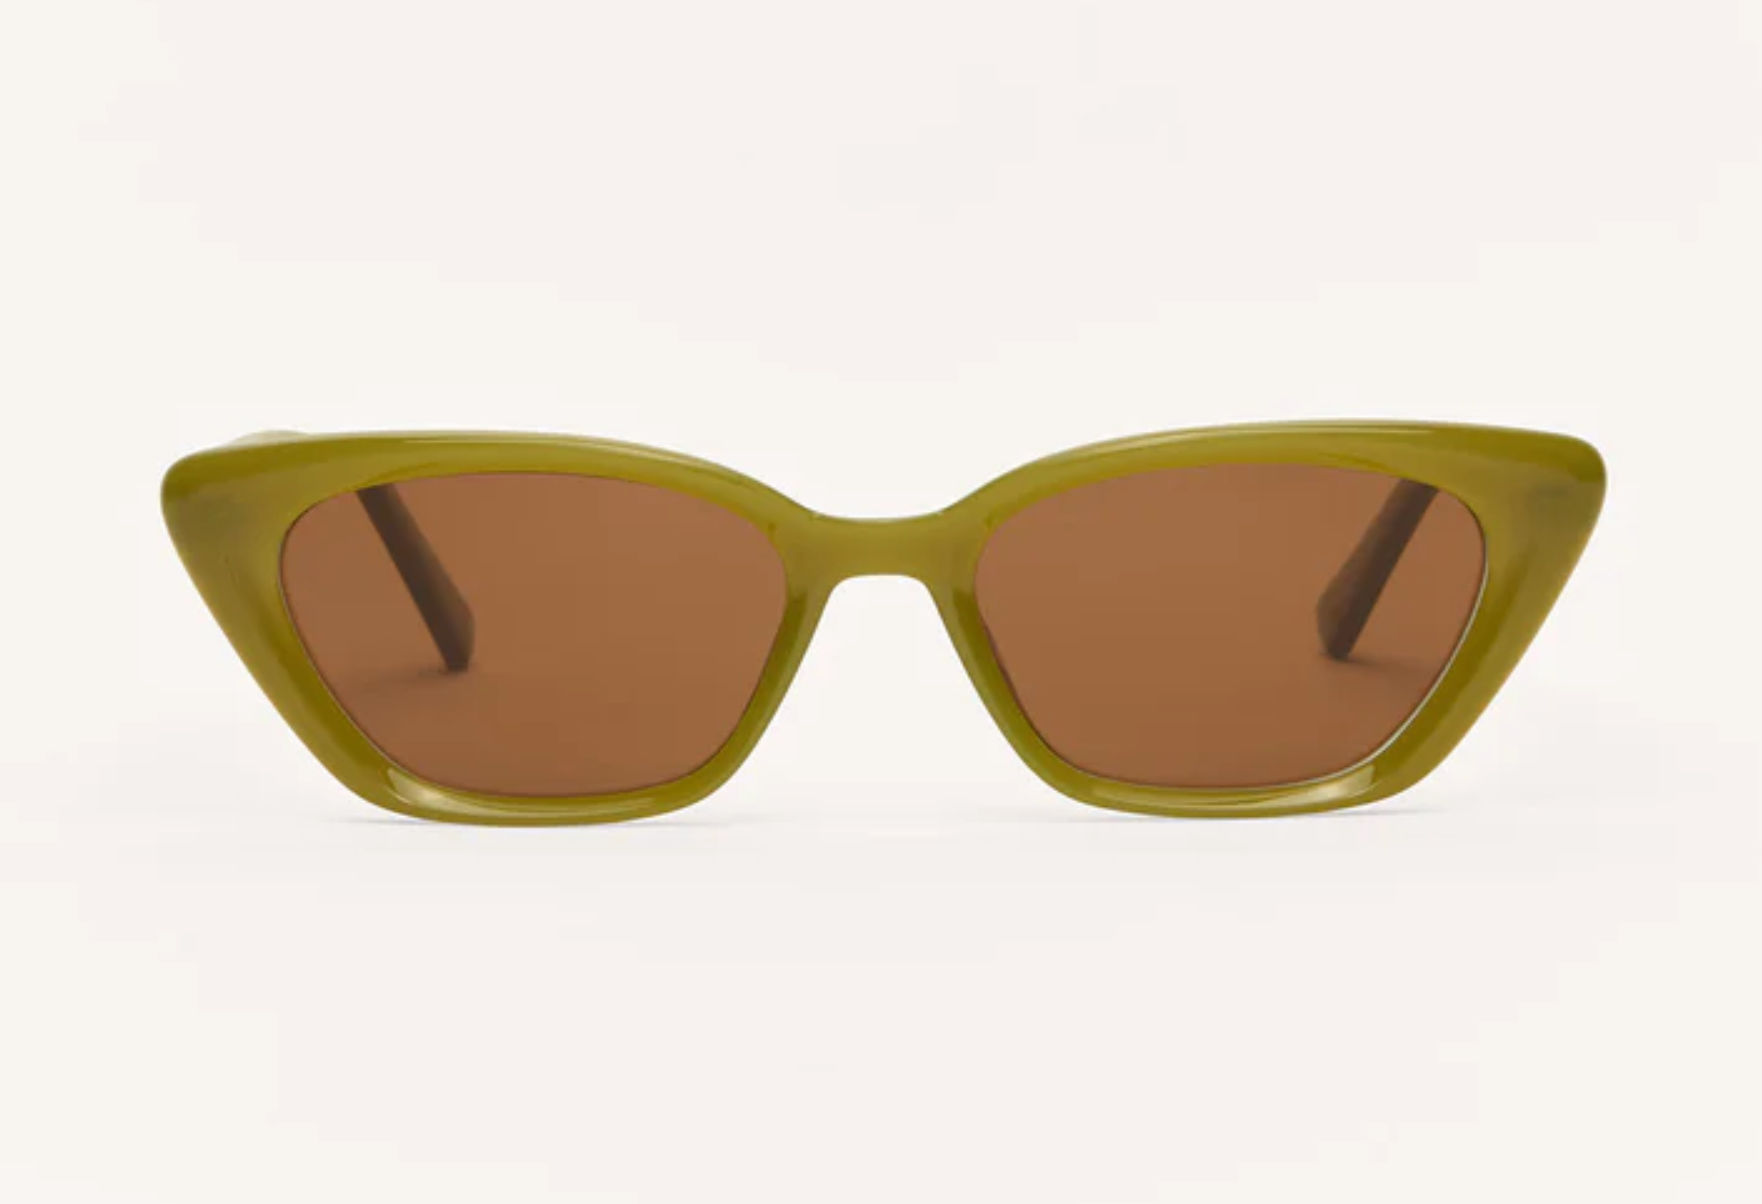 Staycation Sunglasses by Z Supply, Mojito